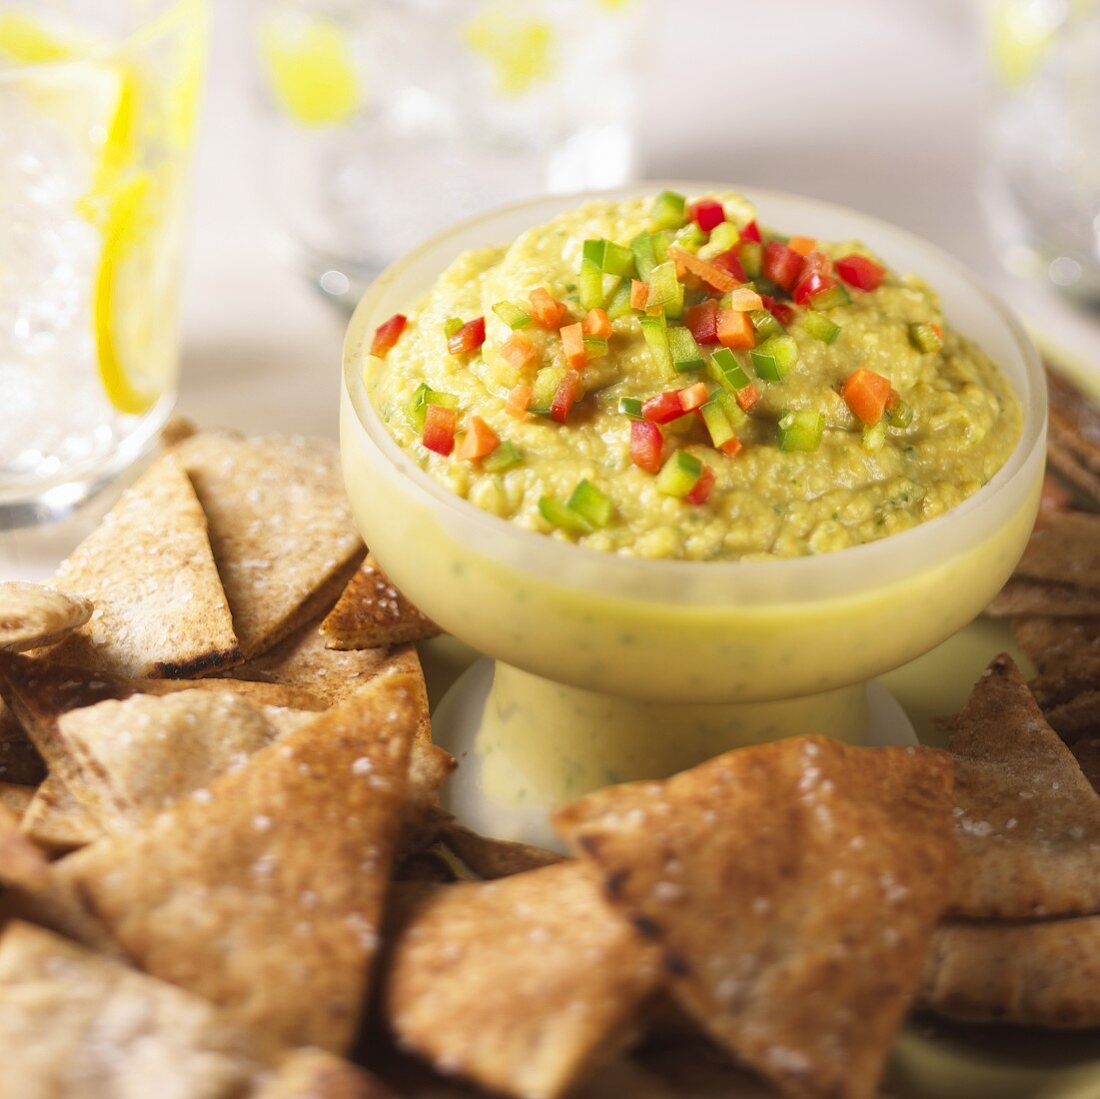 Bowl of Hummus with Pita Chips